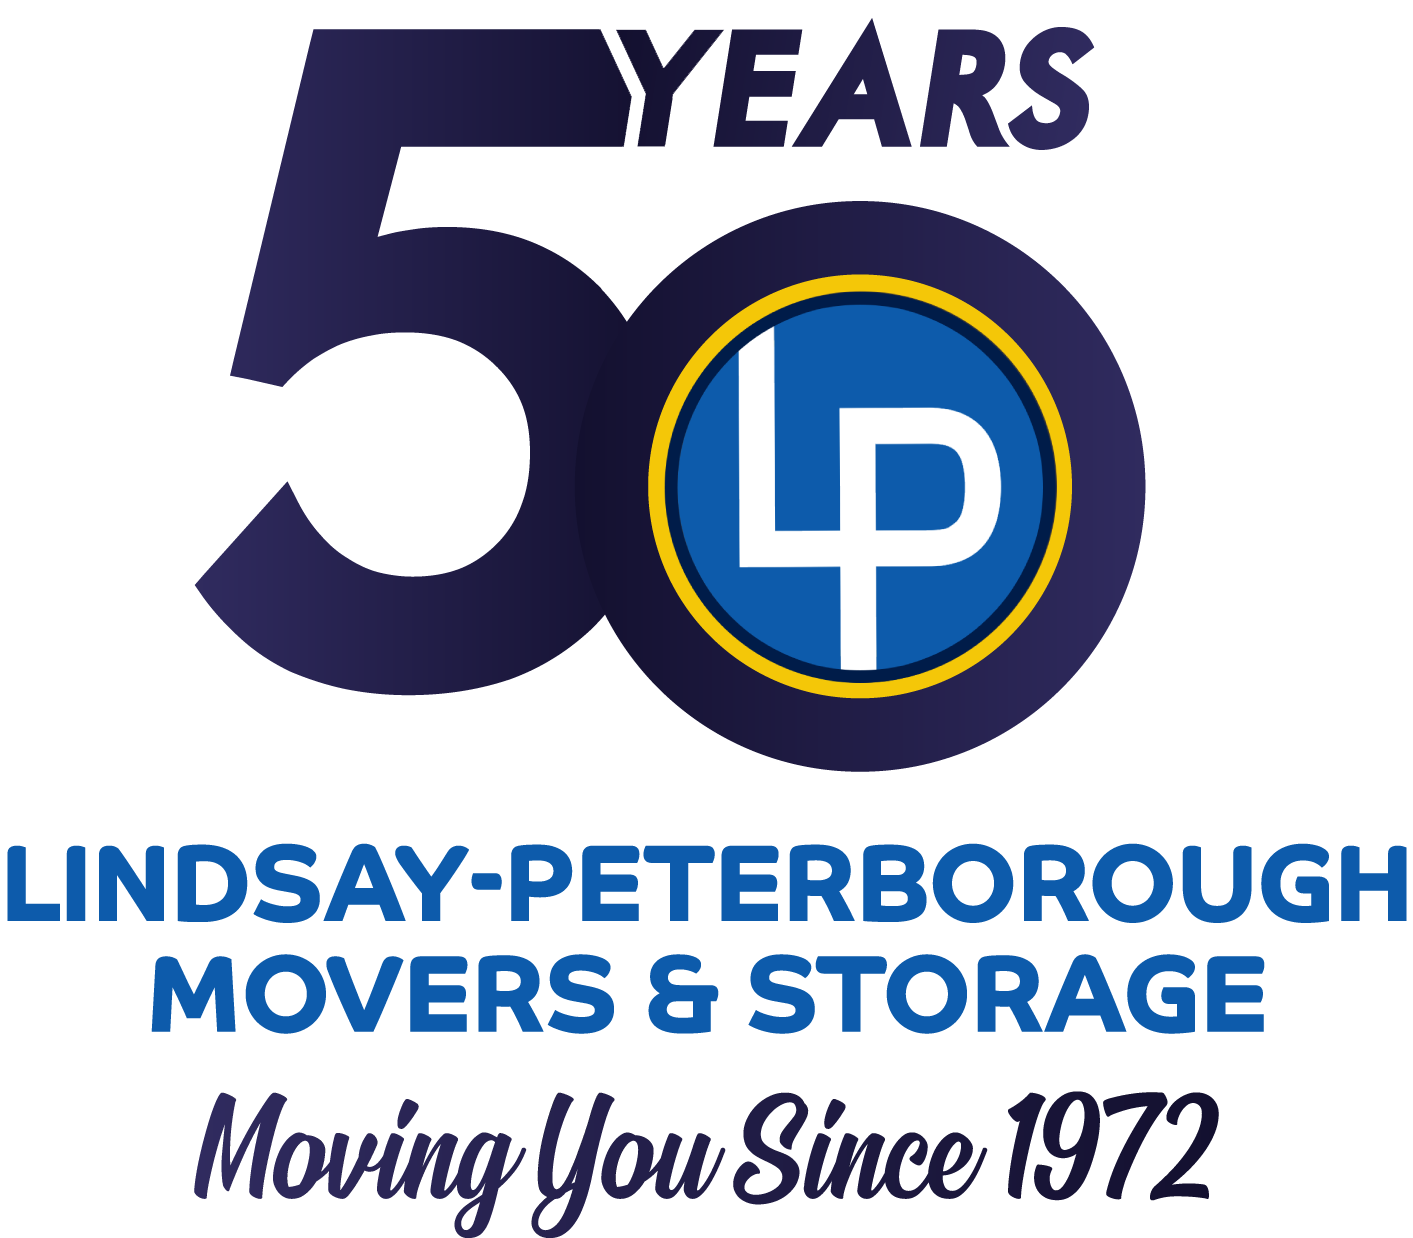 Lindsay-Peterborough Movers Logo